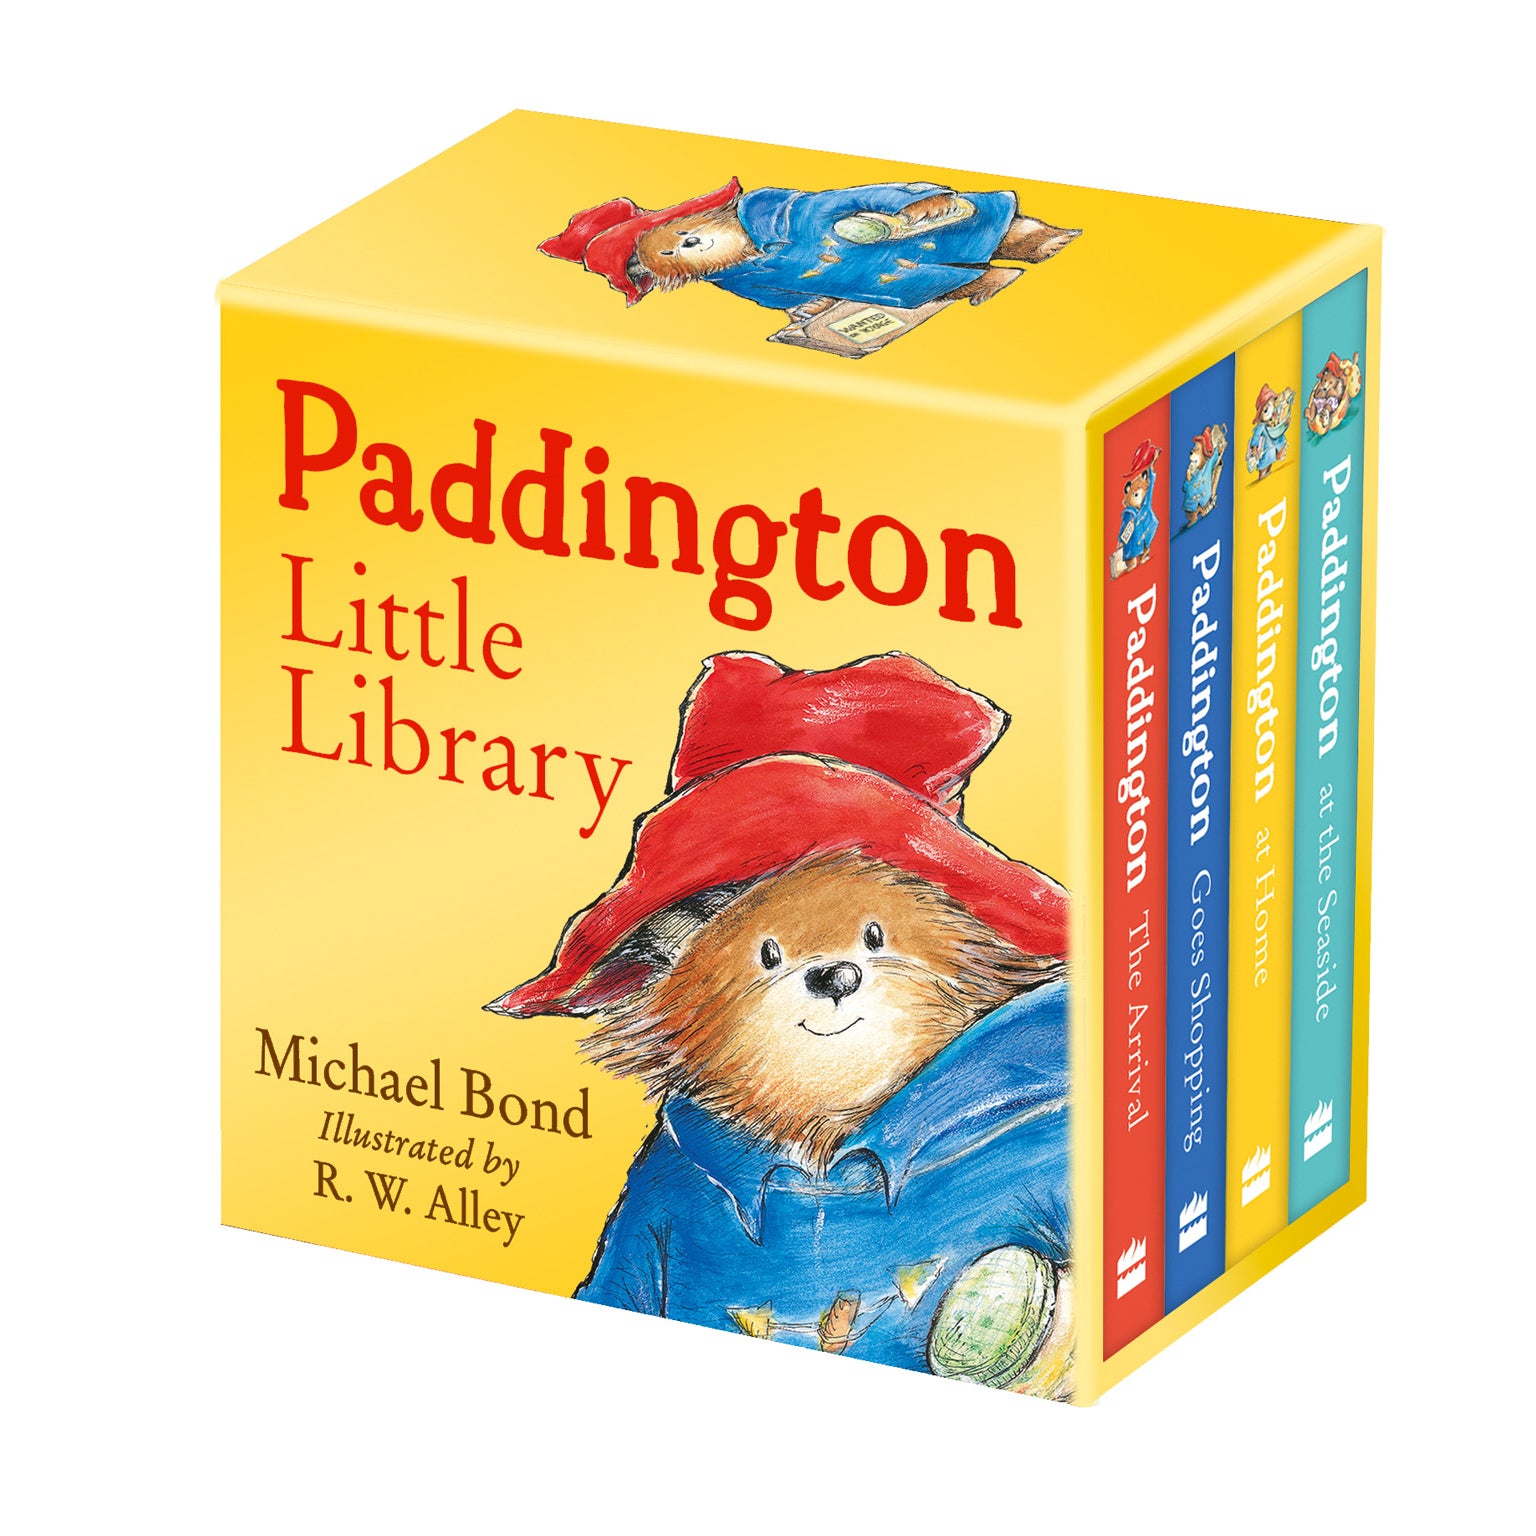 Paddington Little Library (Board books)